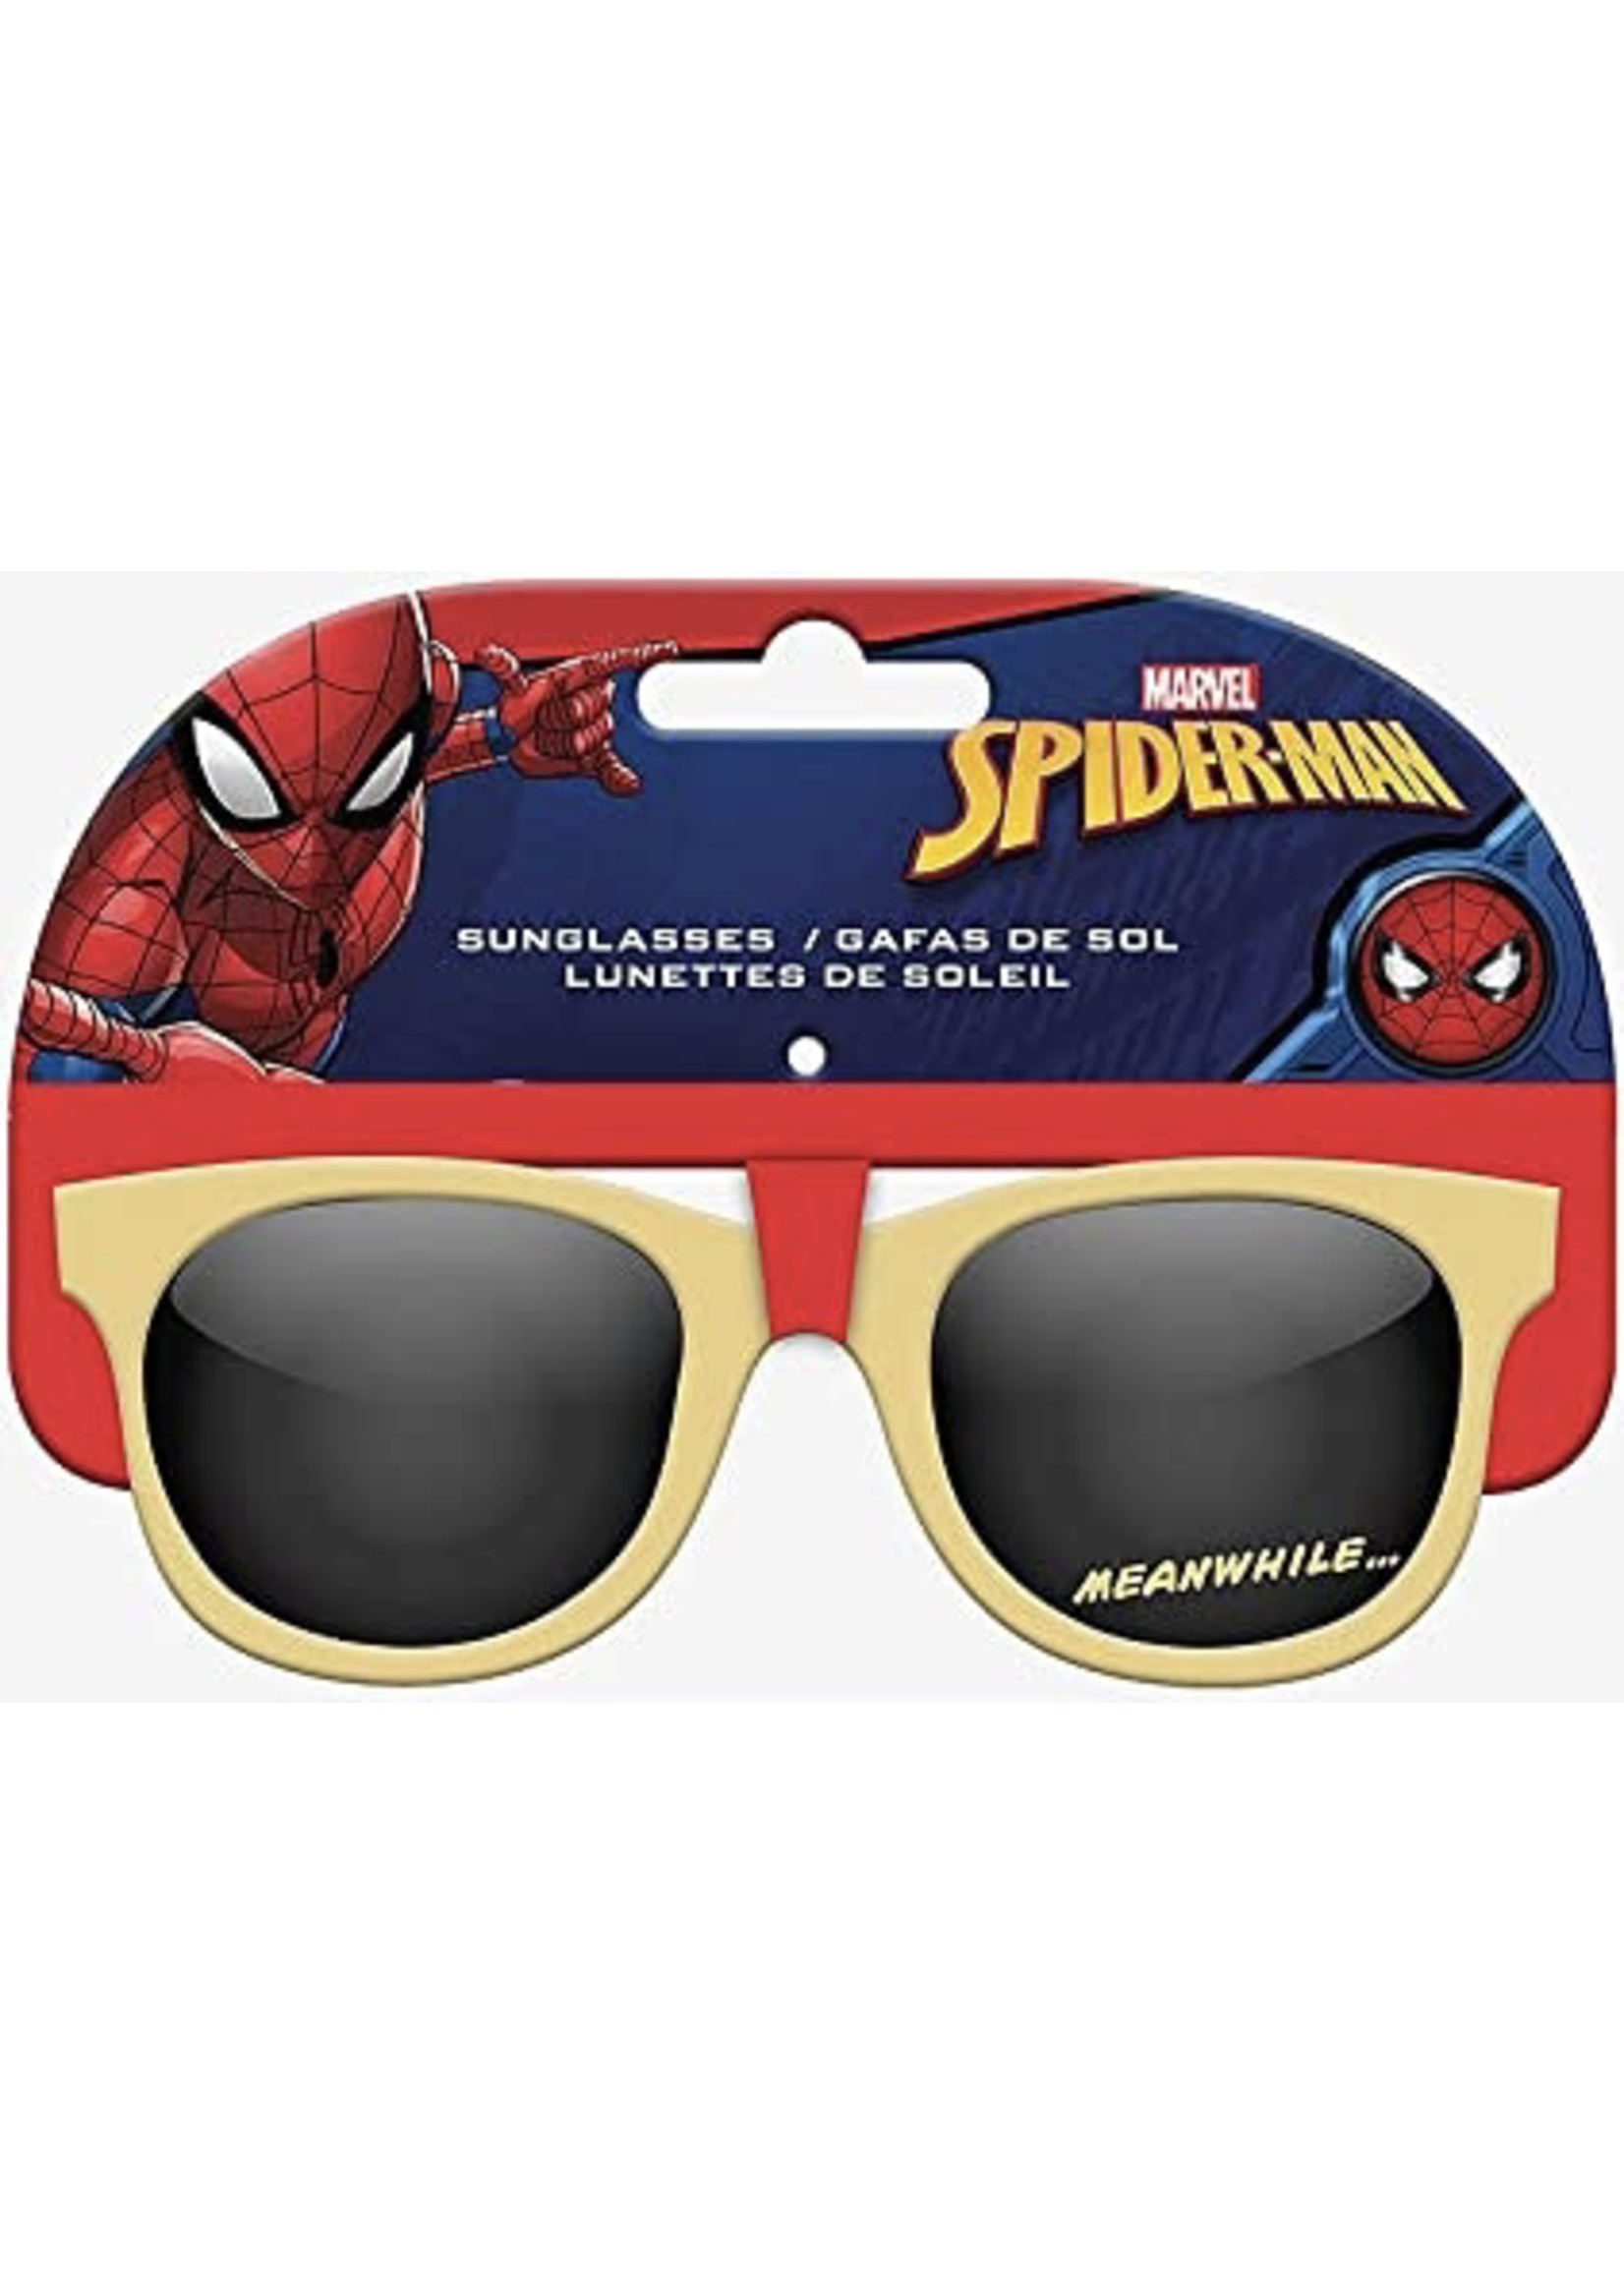 Marvel Spiderman sunglasses from Marvel yellow